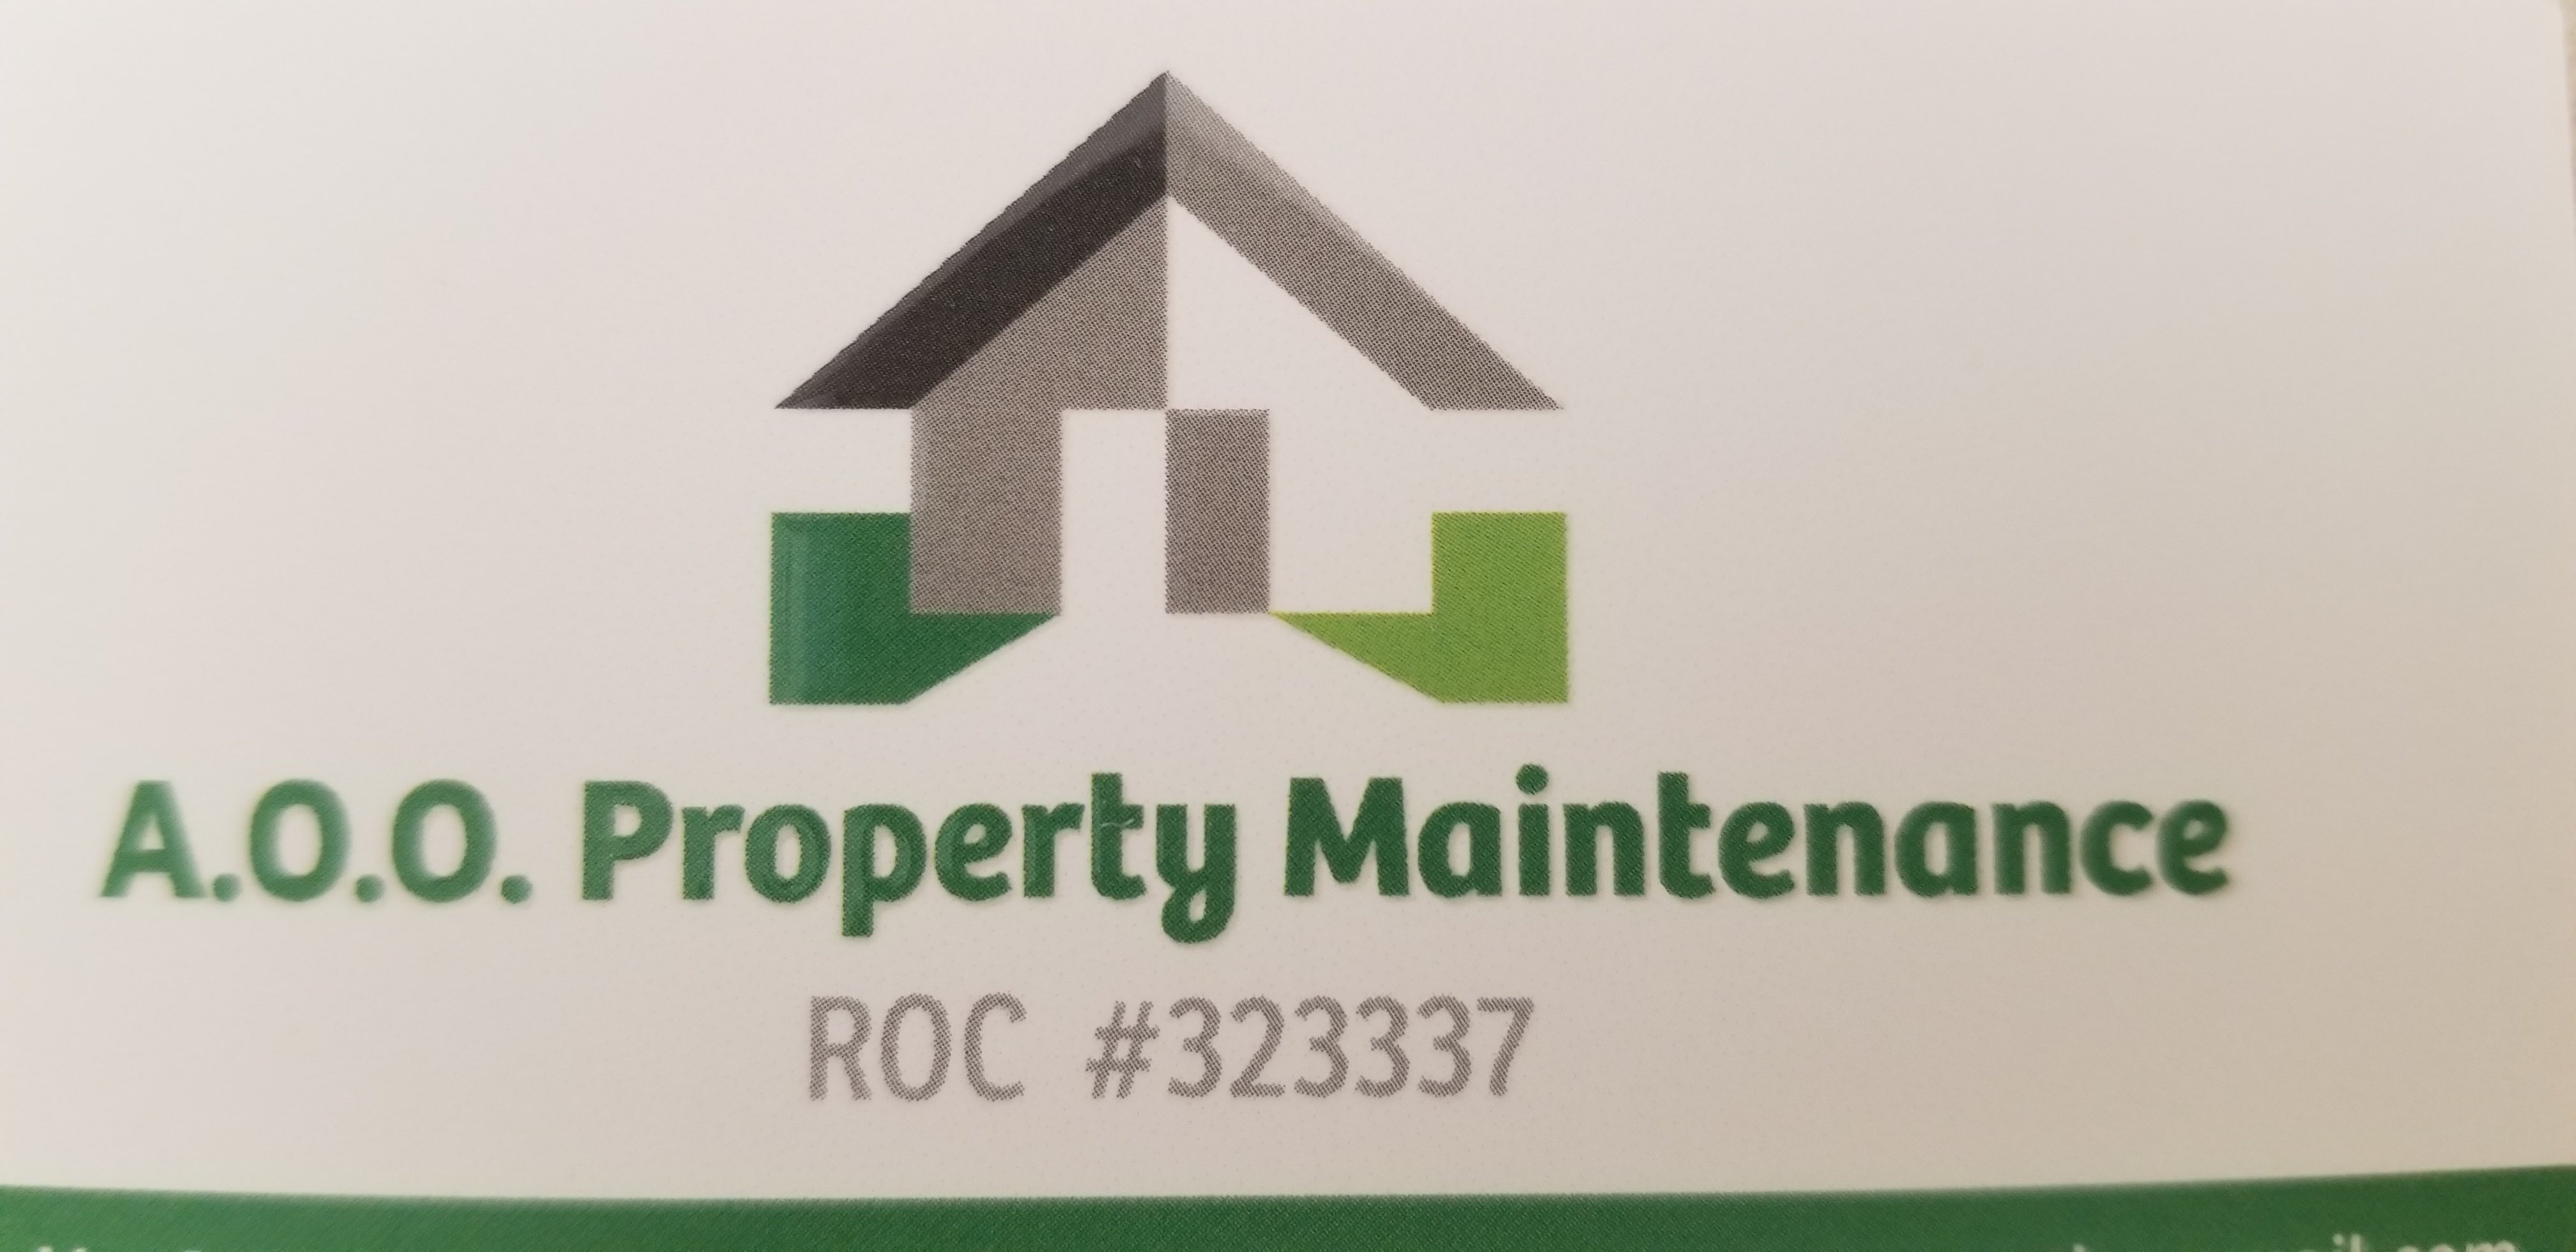 A.O.O. Property Maintenance Logo